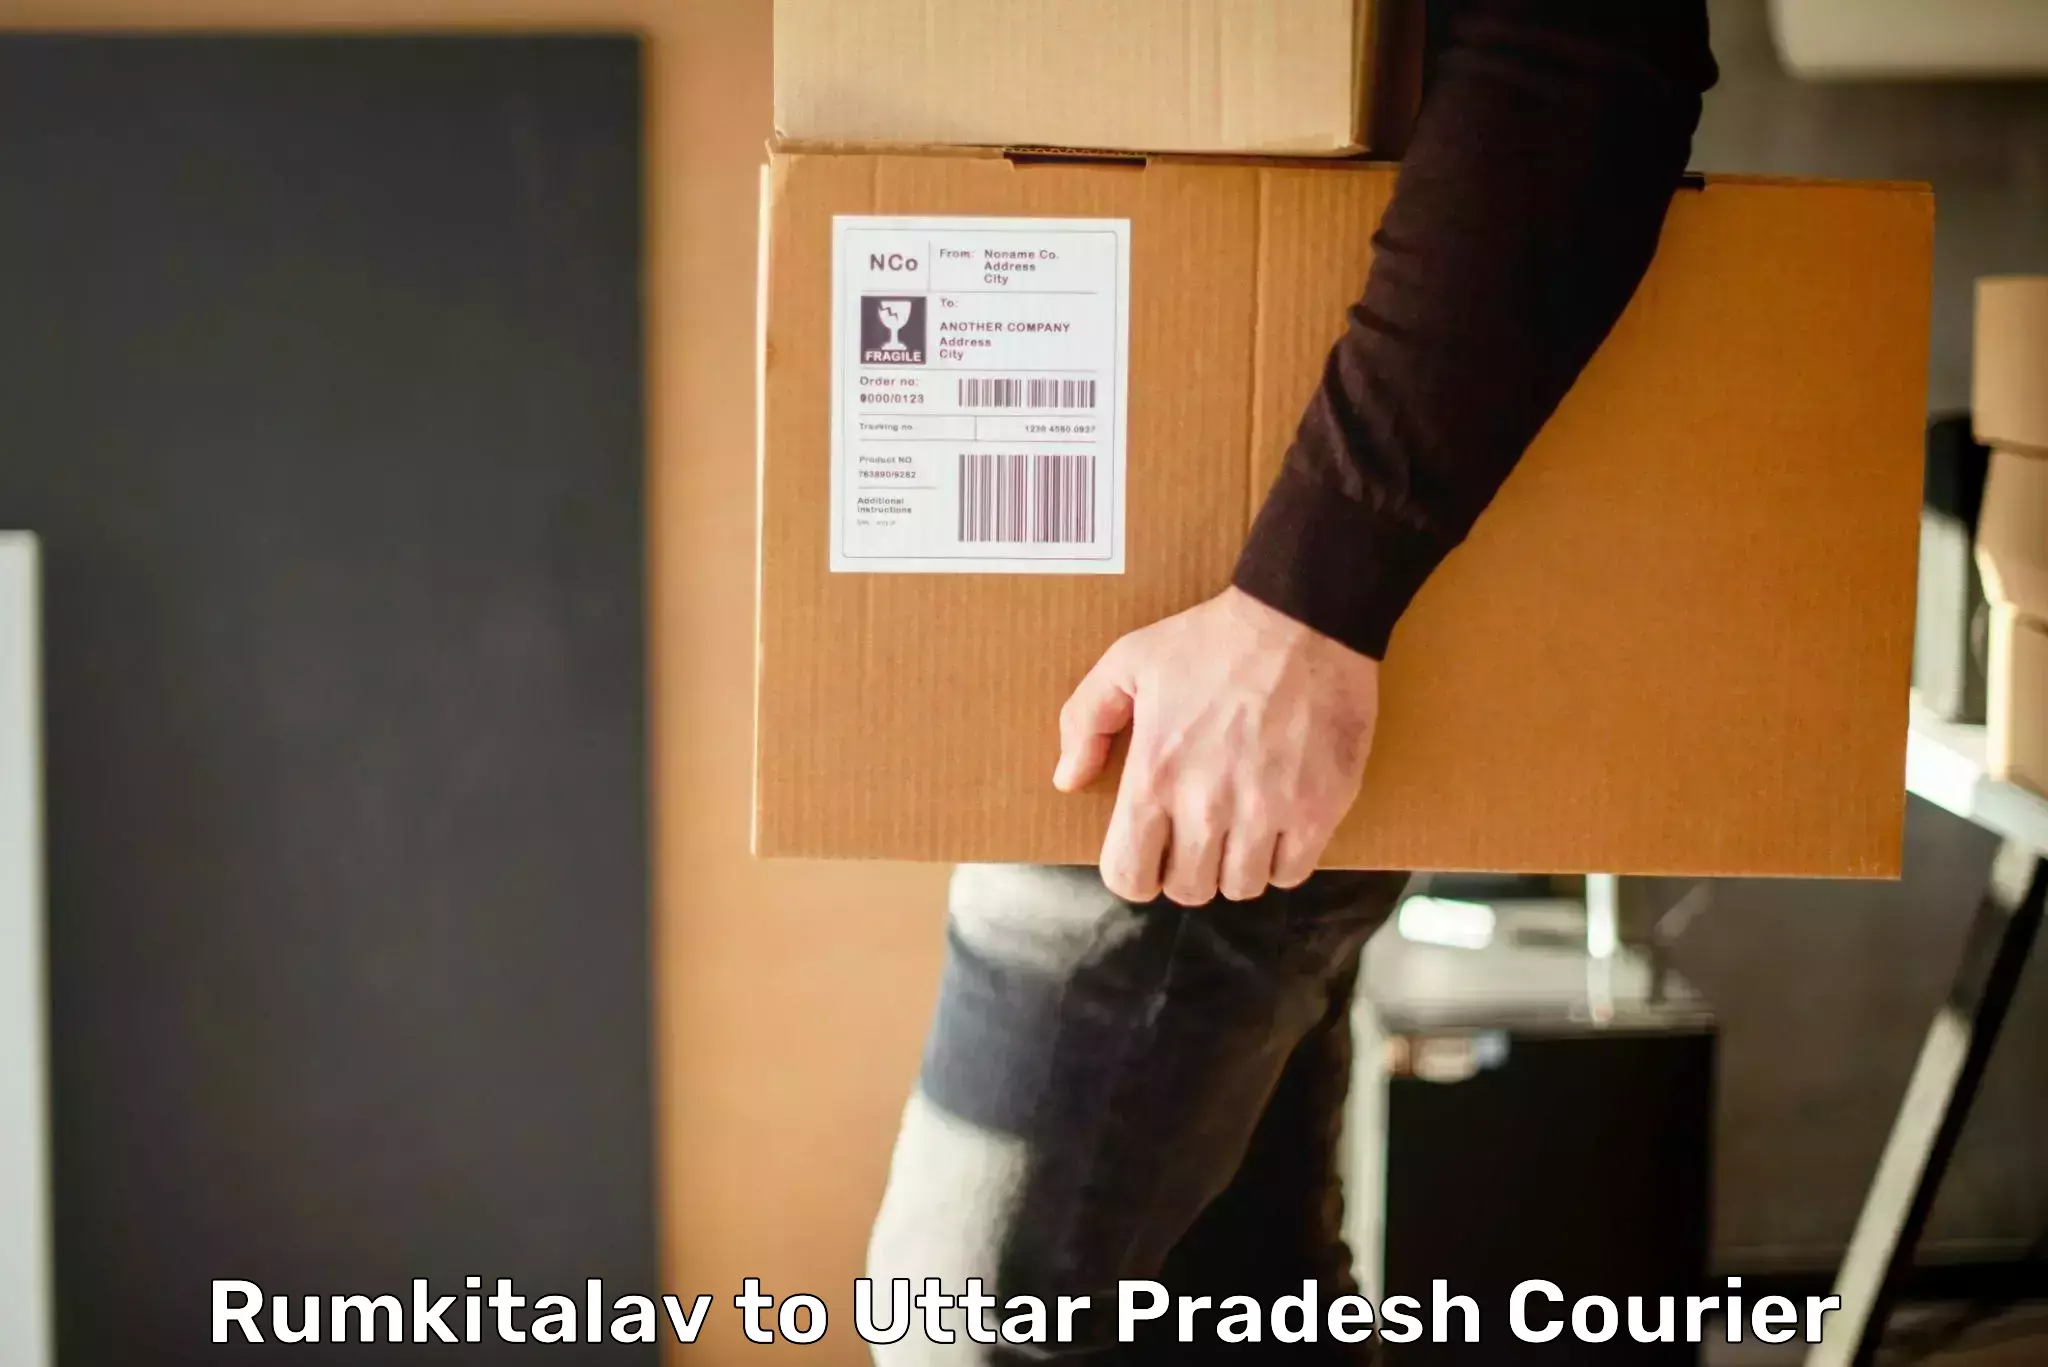 Modern delivery technologies Rumkitalav to Uttar Pradesh